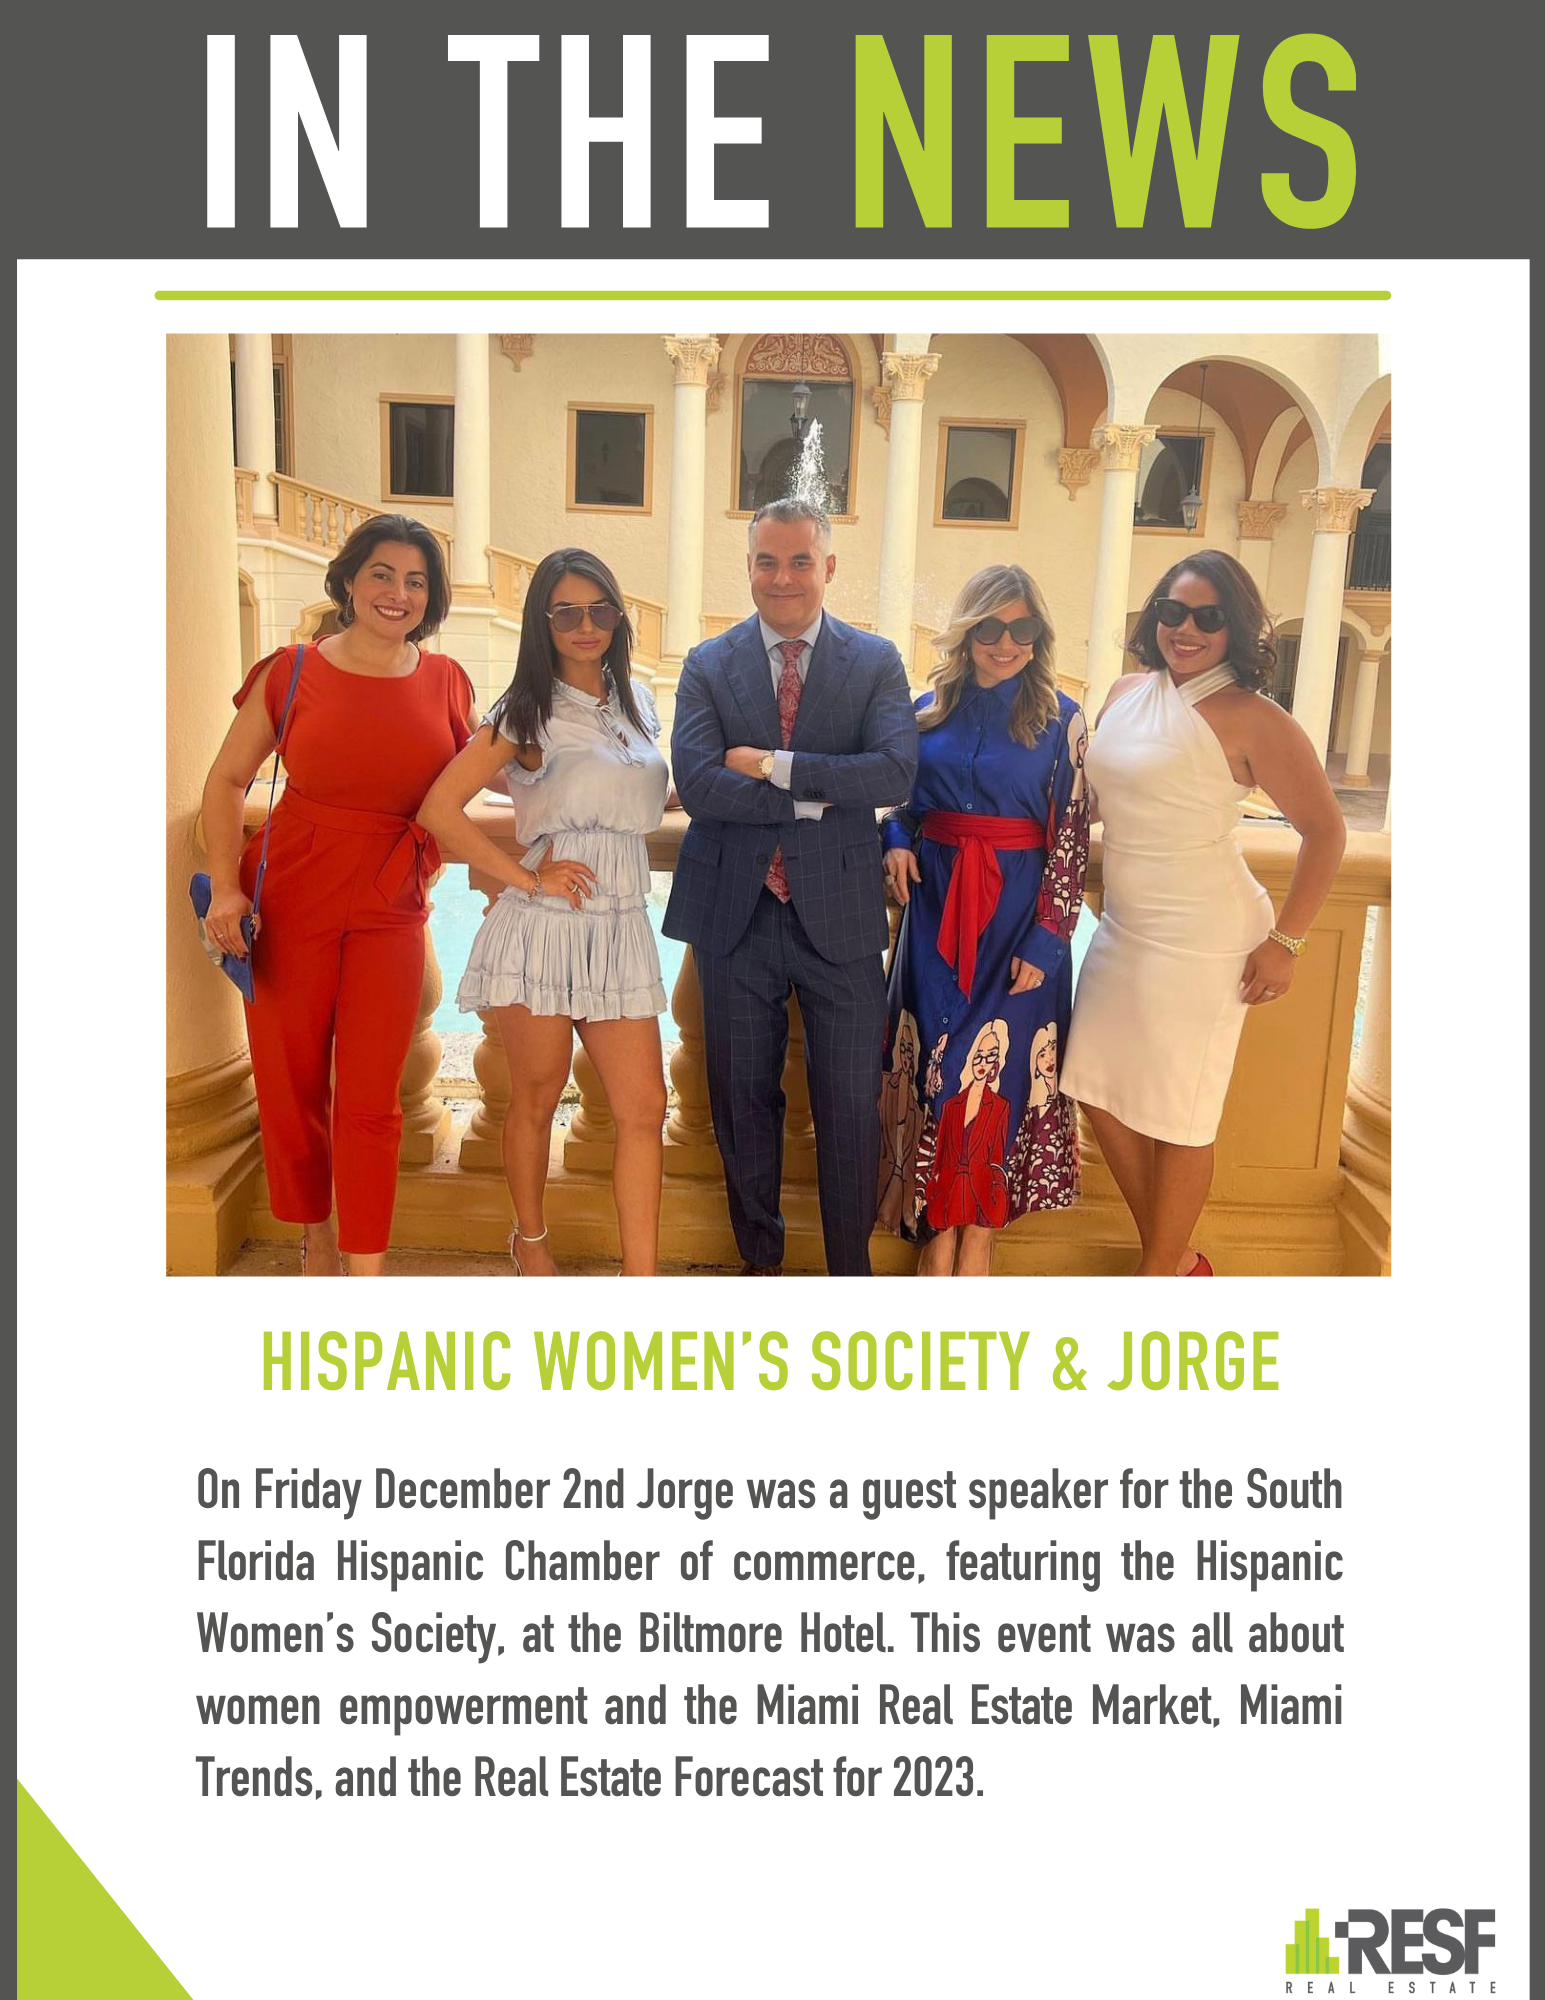 Hispanic Women’s Society & Jorge